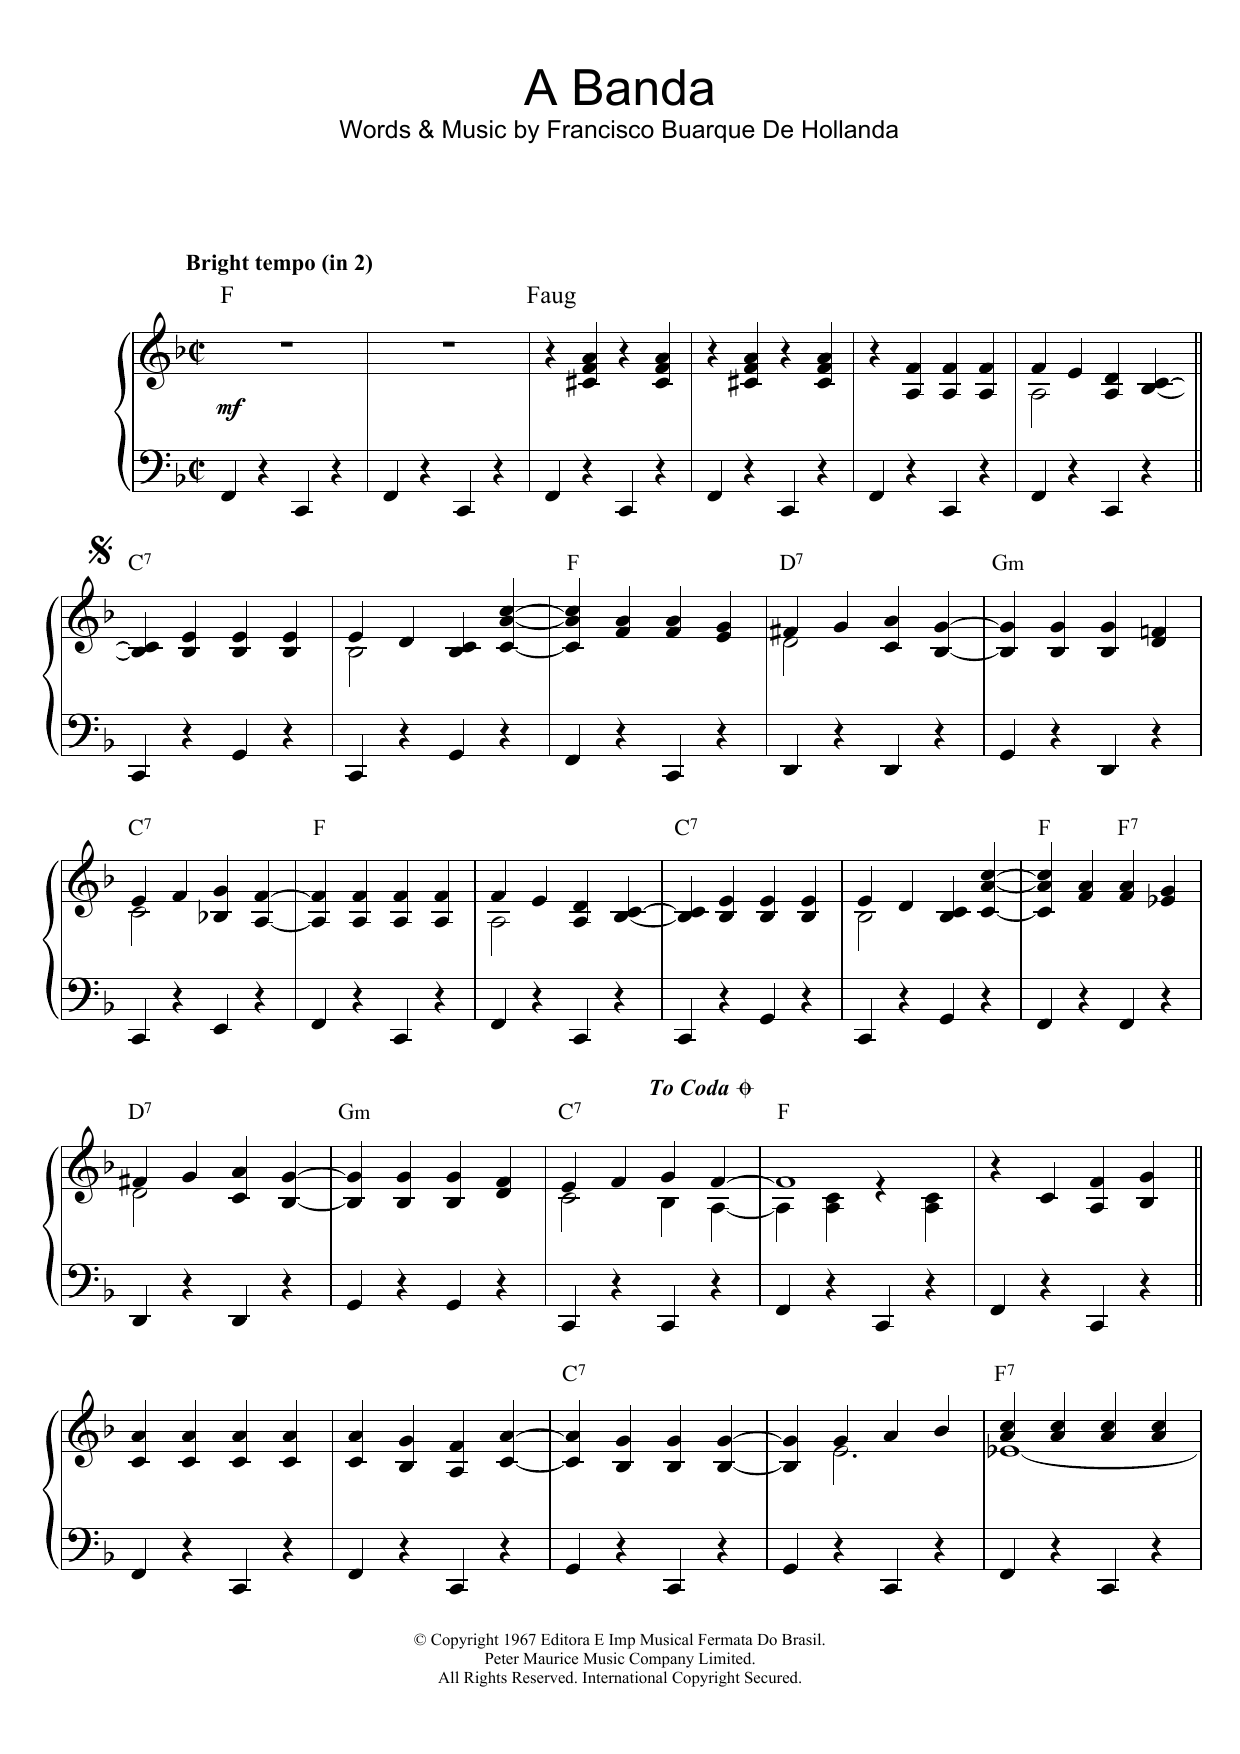 Herb Alpert & The Tijuana Brass A Banda Sheet Music Notes & Chords for Piano - Download or Print PDF